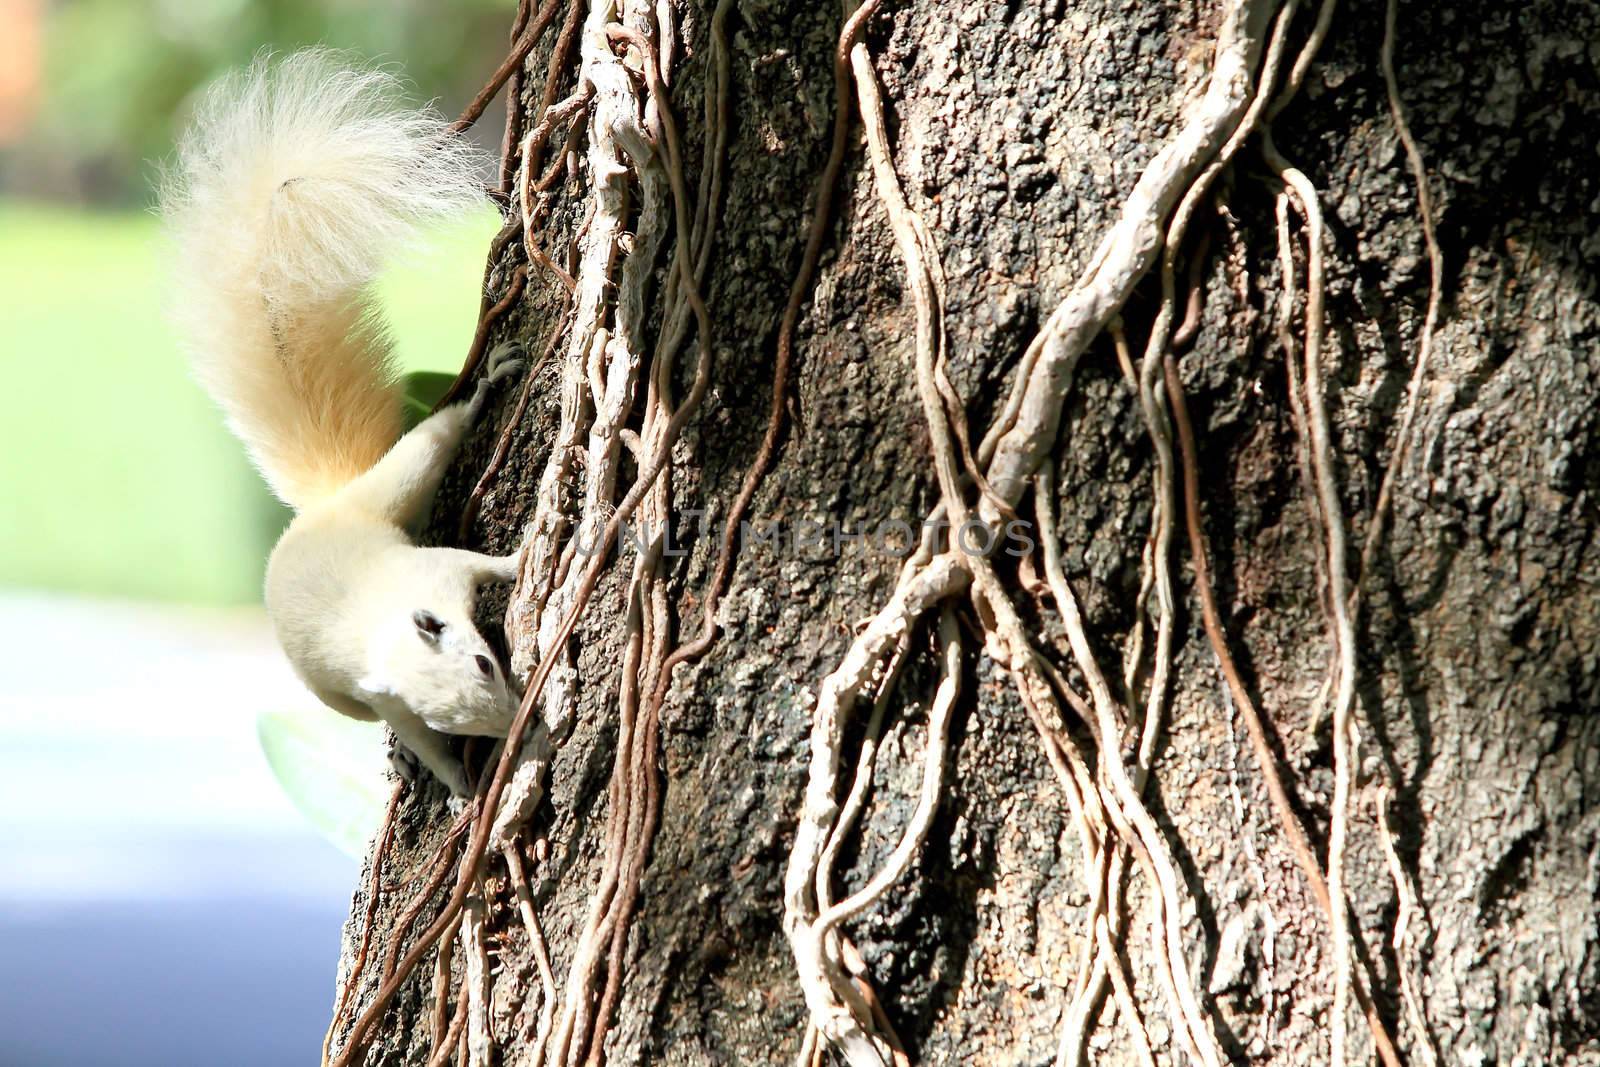 Albino squirrel feeding on the tree.